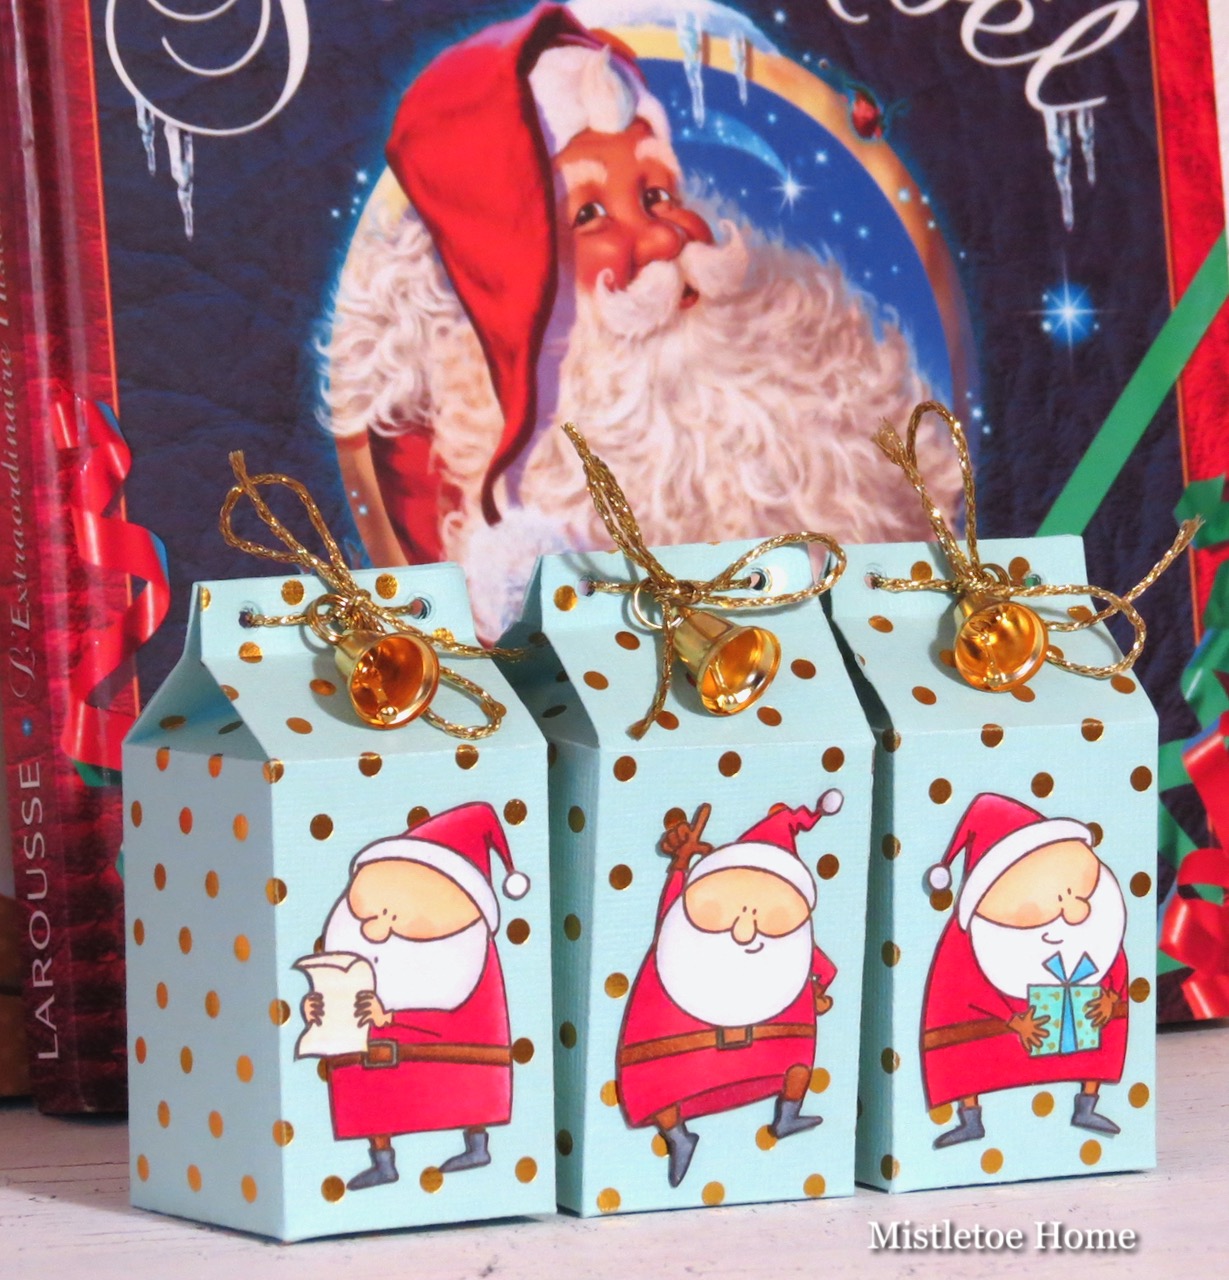 Mistletoe Home : Mini treat boxes decorated with Santa